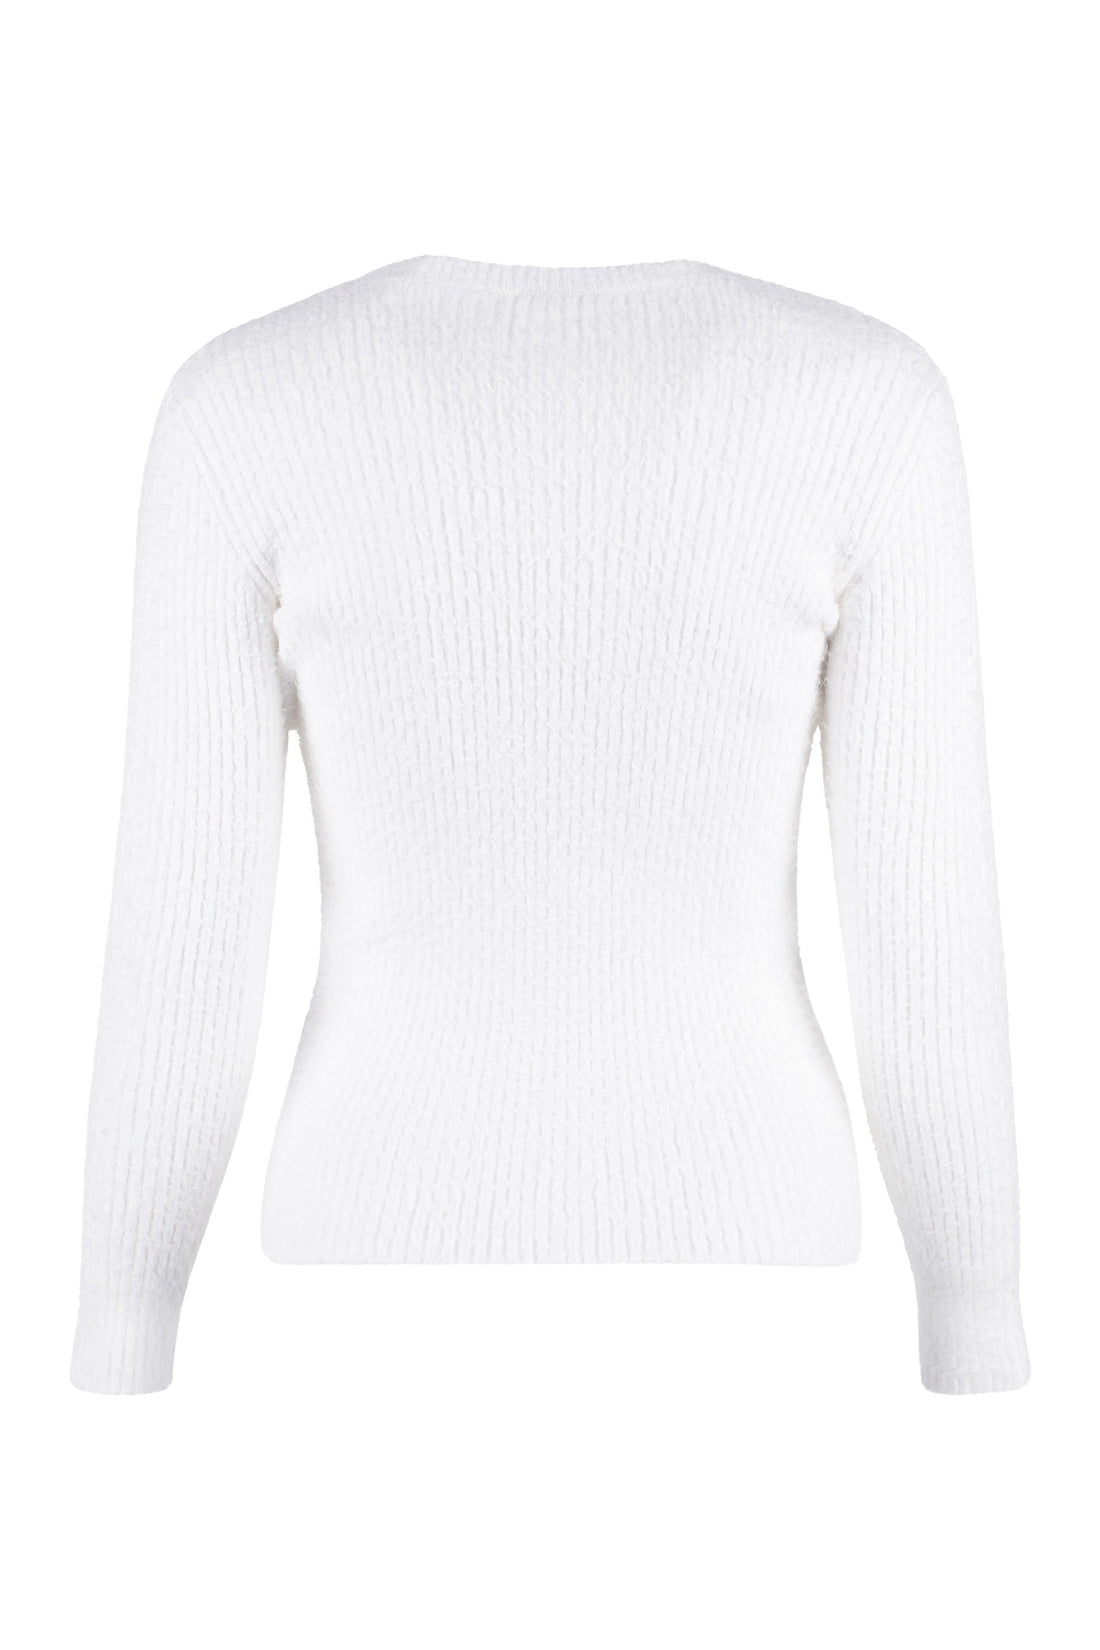 Balenciaga-OUTLET-SALE-Long sleeve crew-neck sweater-ARCHIVIST